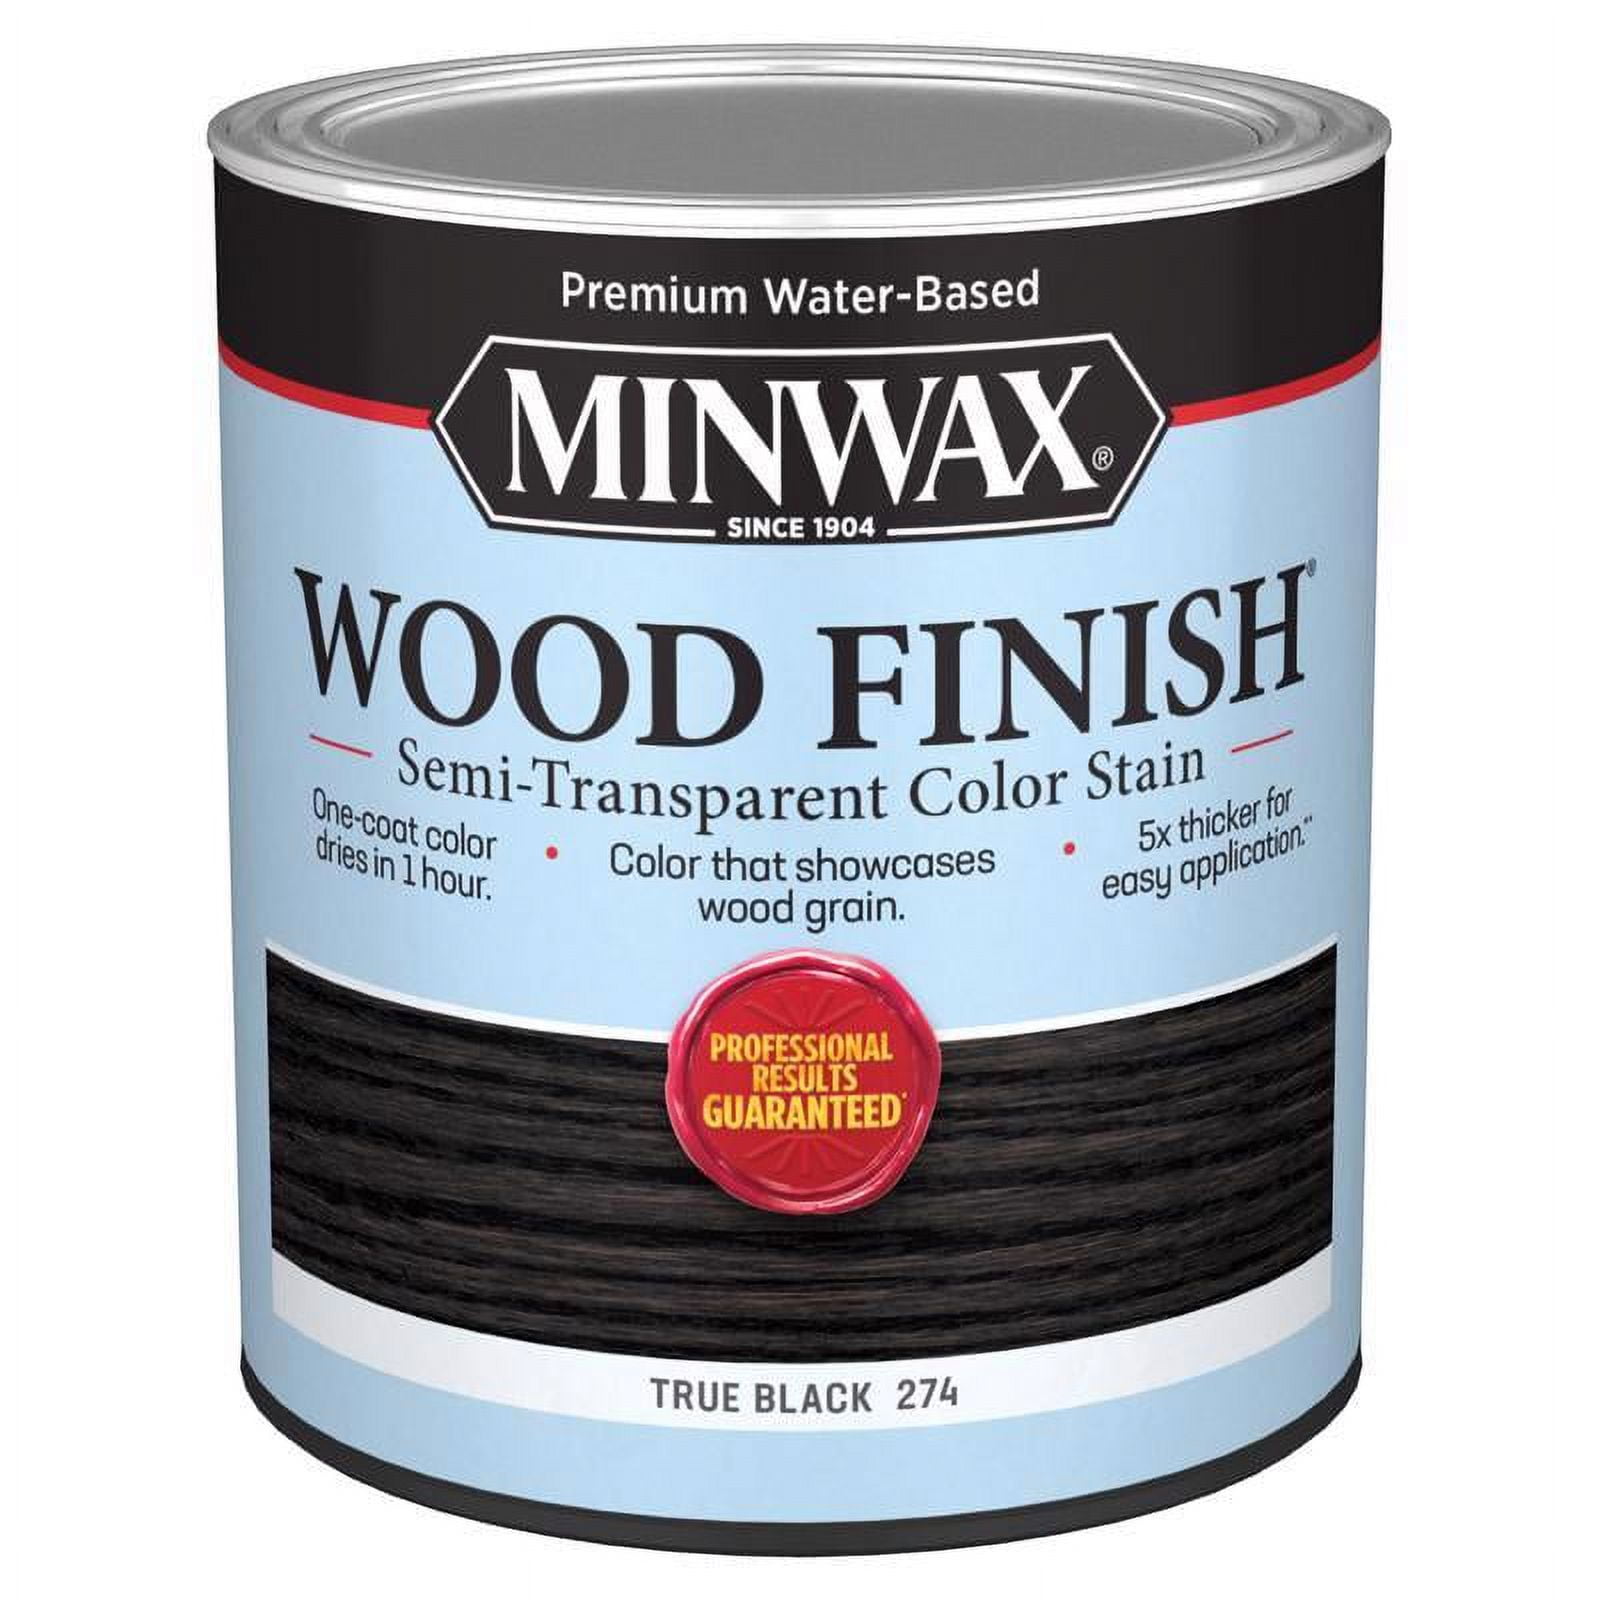 Wood Dye - Aniline Dye 5 Multi Color Kit - Keda Dye Kit Includes 5 Wood  Stain Colors Just Add Water